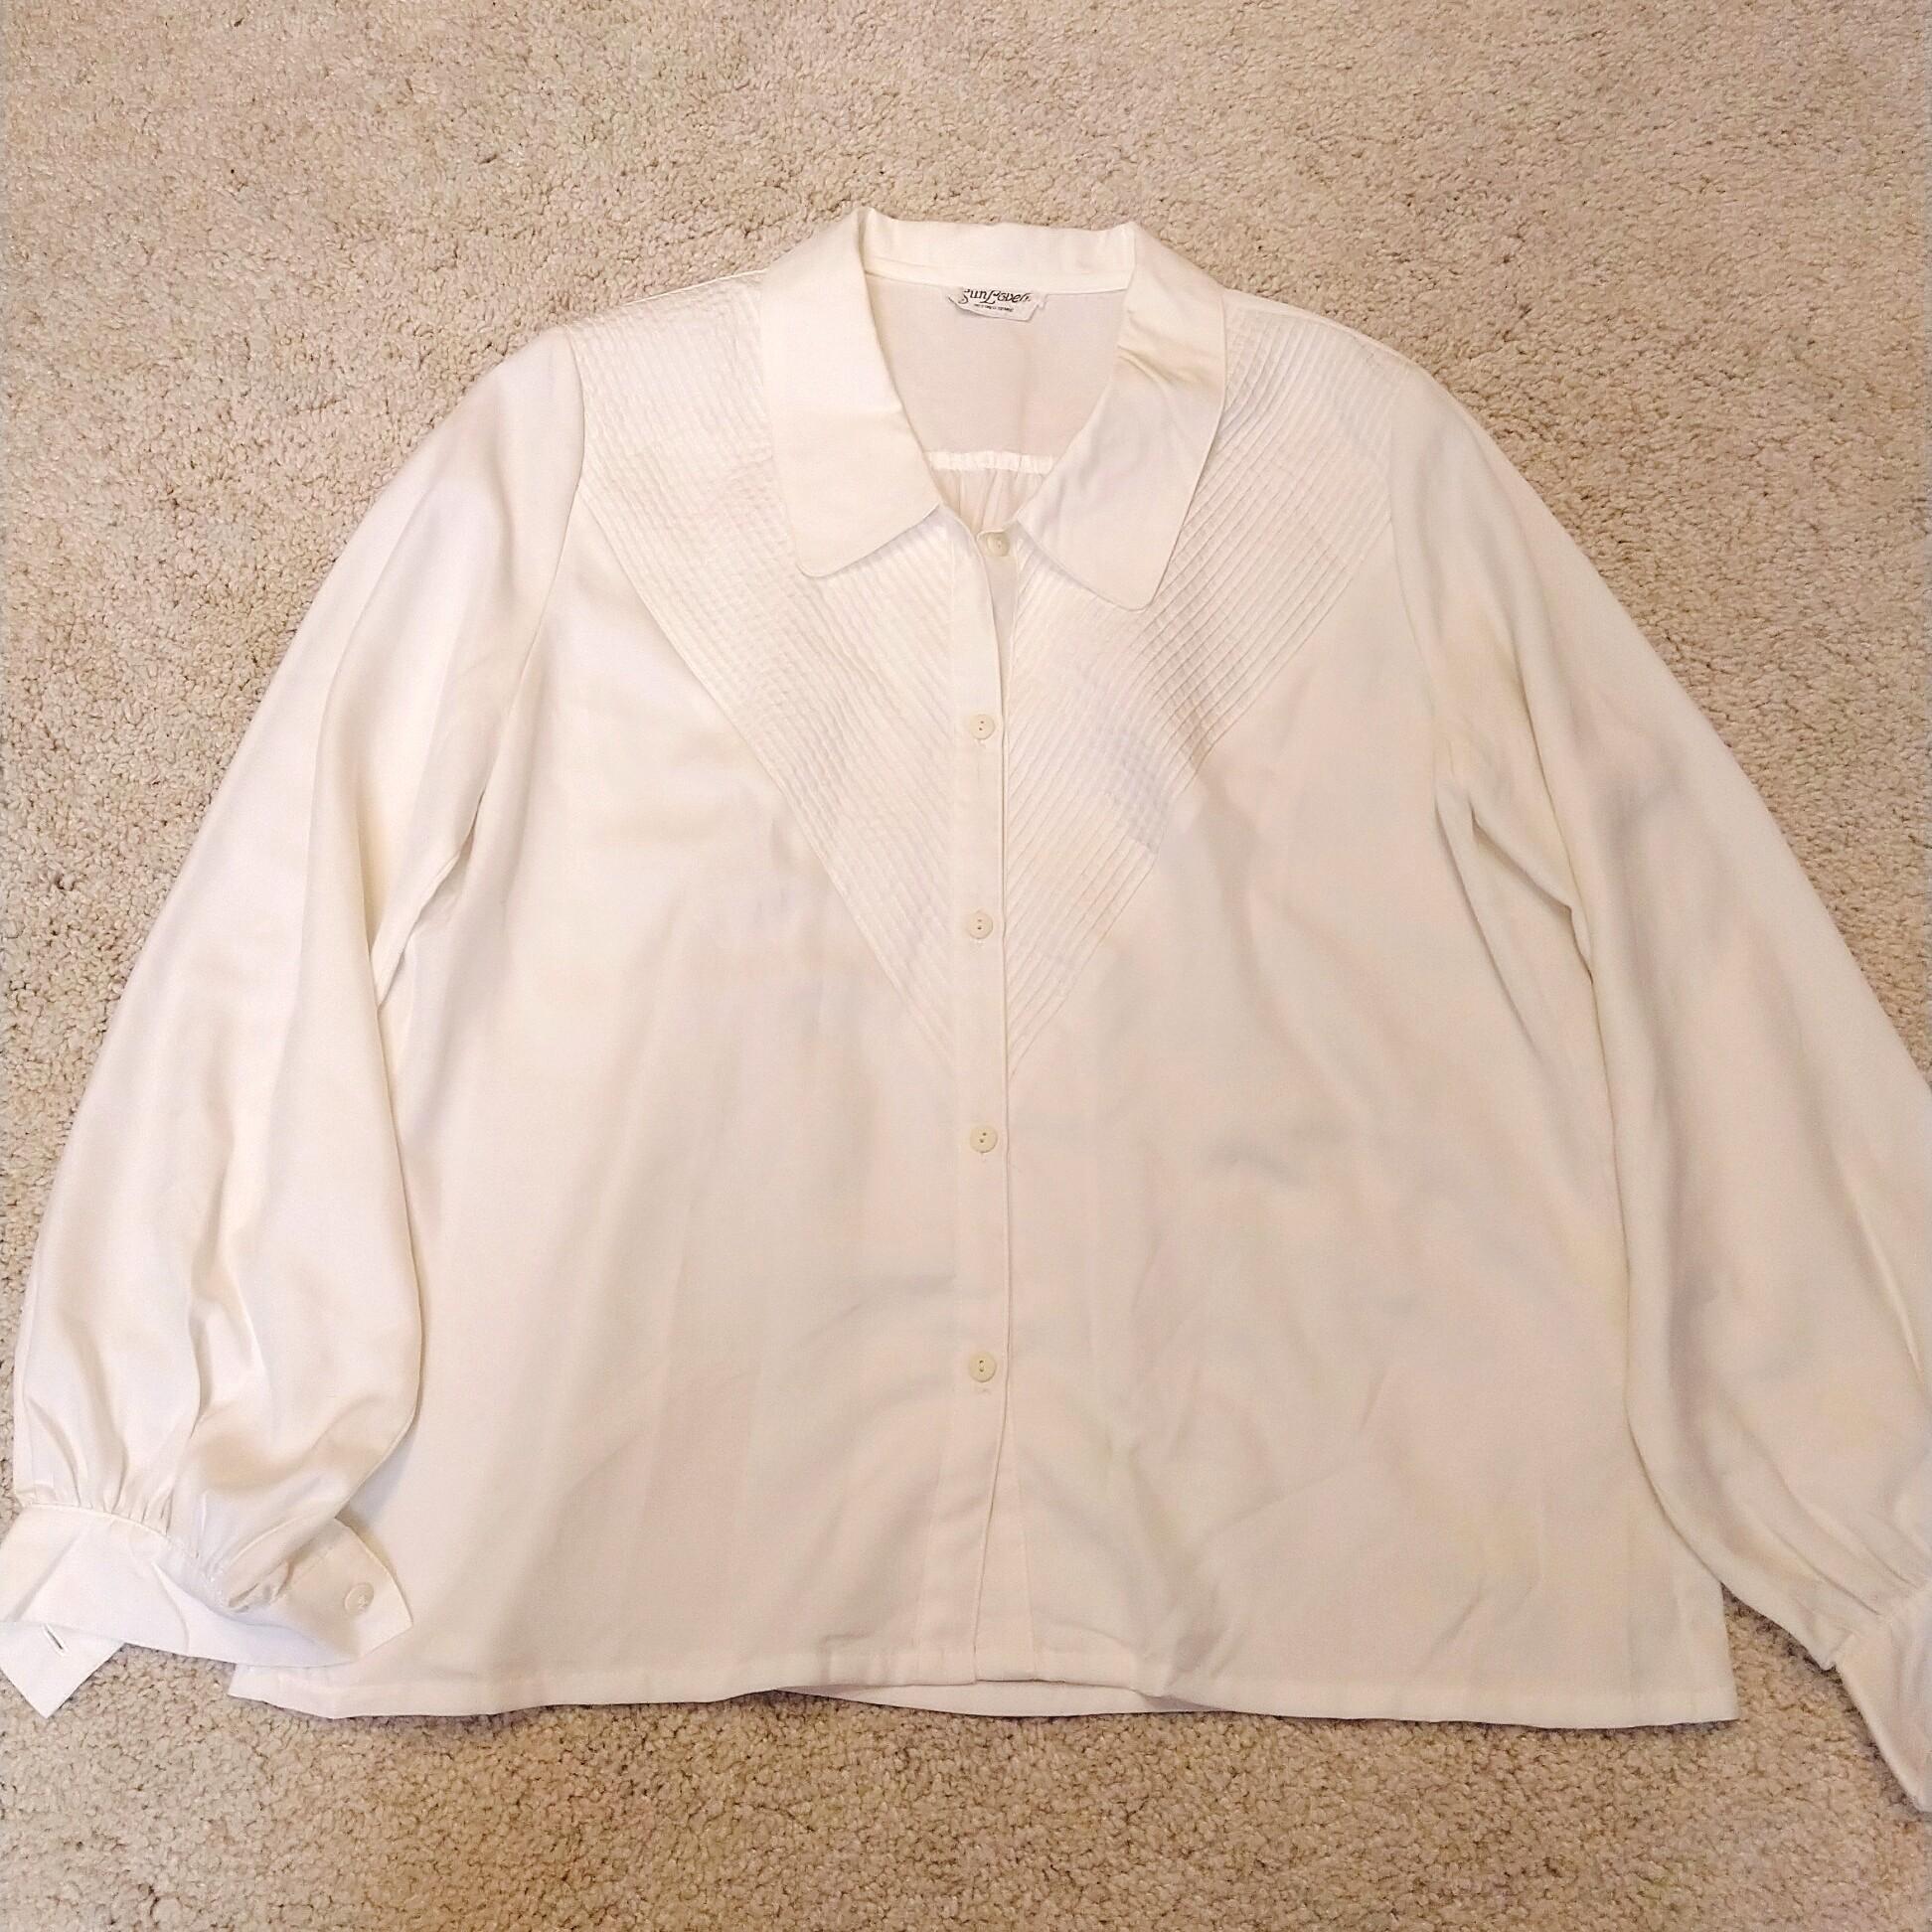 ito fukuoka】greedy blouse linen tops 作家 割引特売中 - www